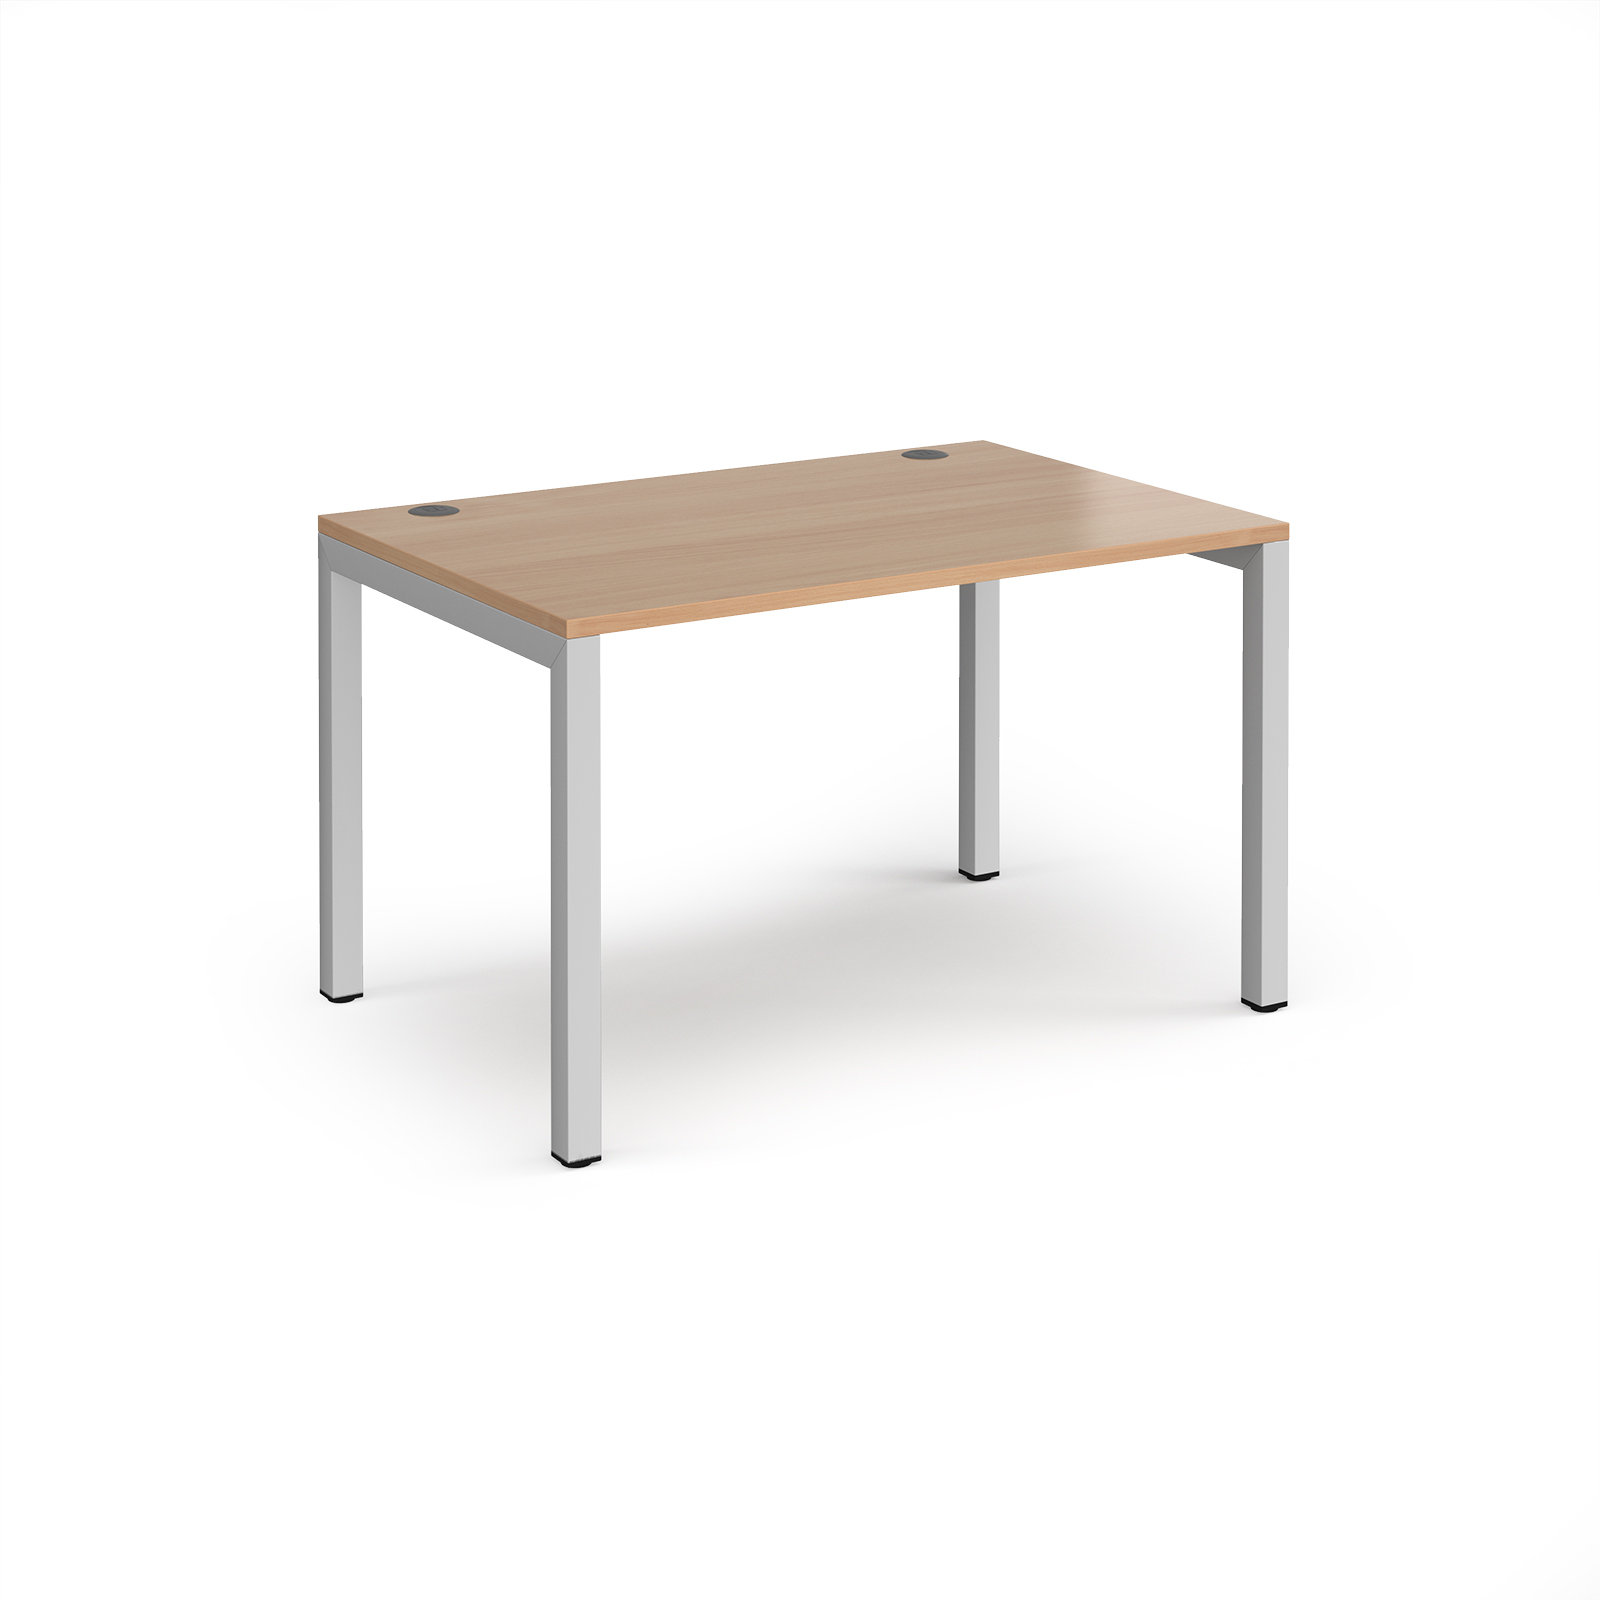 Connex single desk 1200mm x 800mm - silver frame, beech top